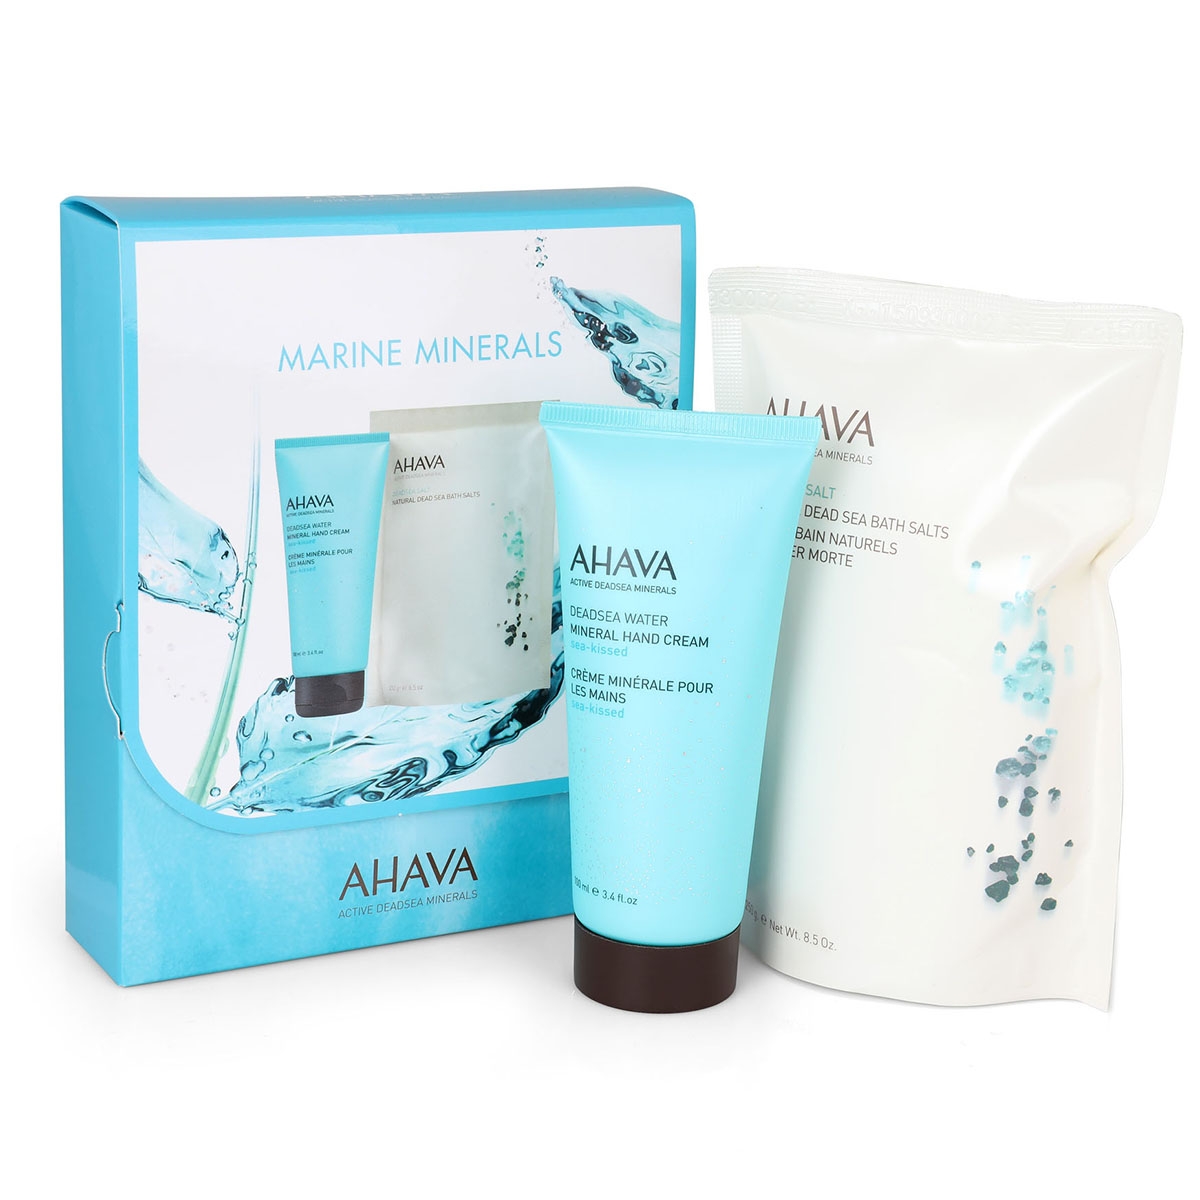 AHAVA Marine Minerals: Mineral Hand Cream and Dead Sea Bath Salts - 1